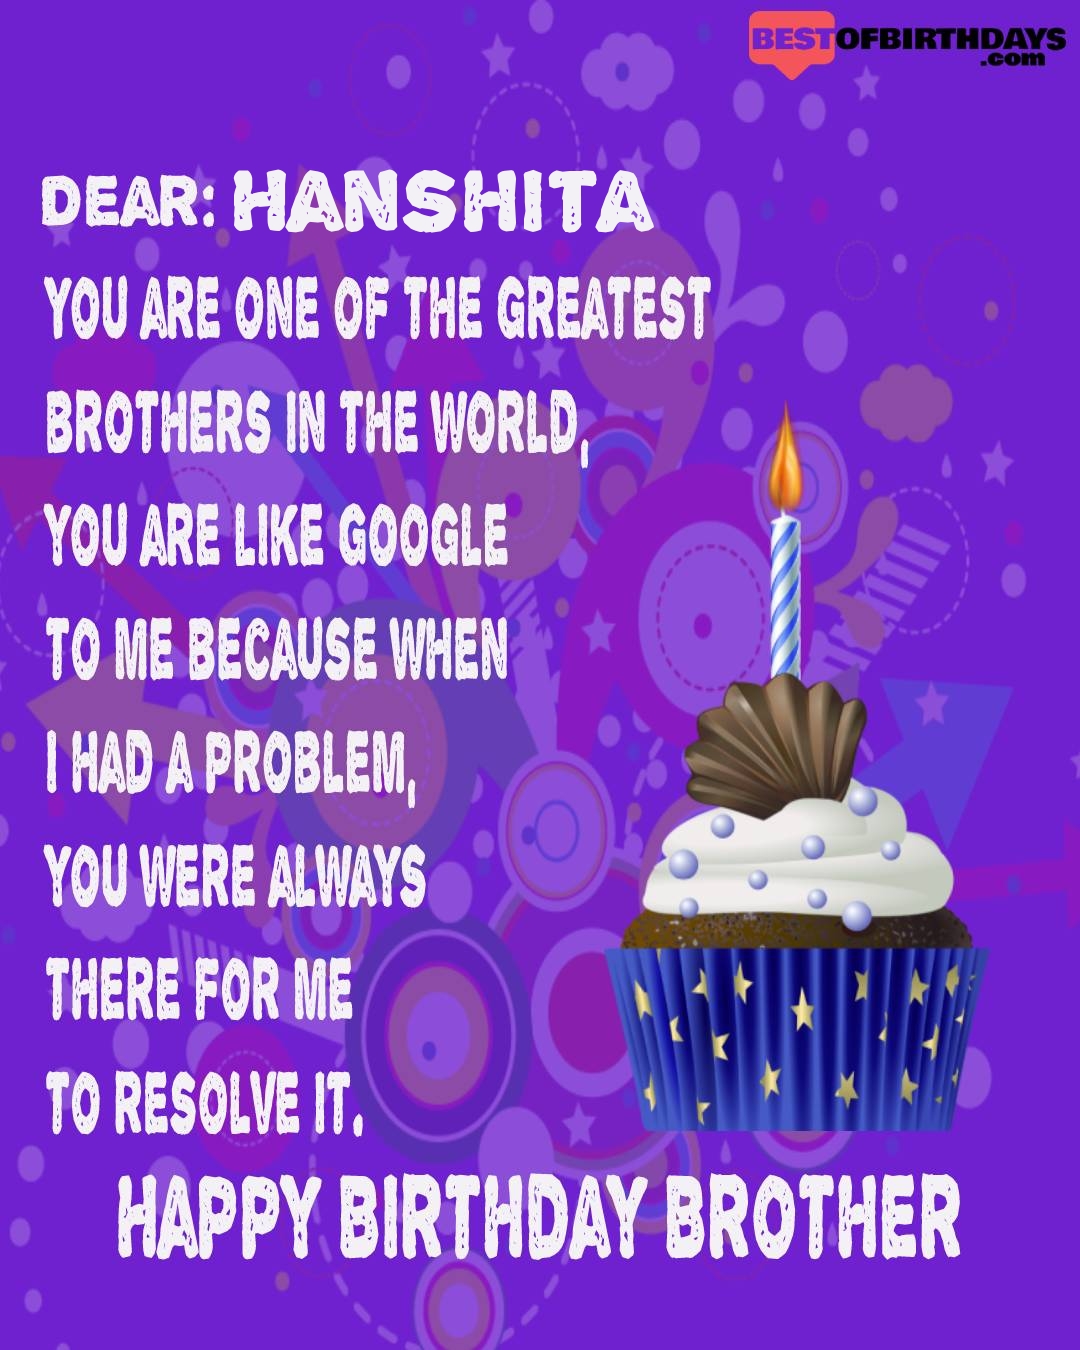 Happy birthday hanshita bhai brother bro